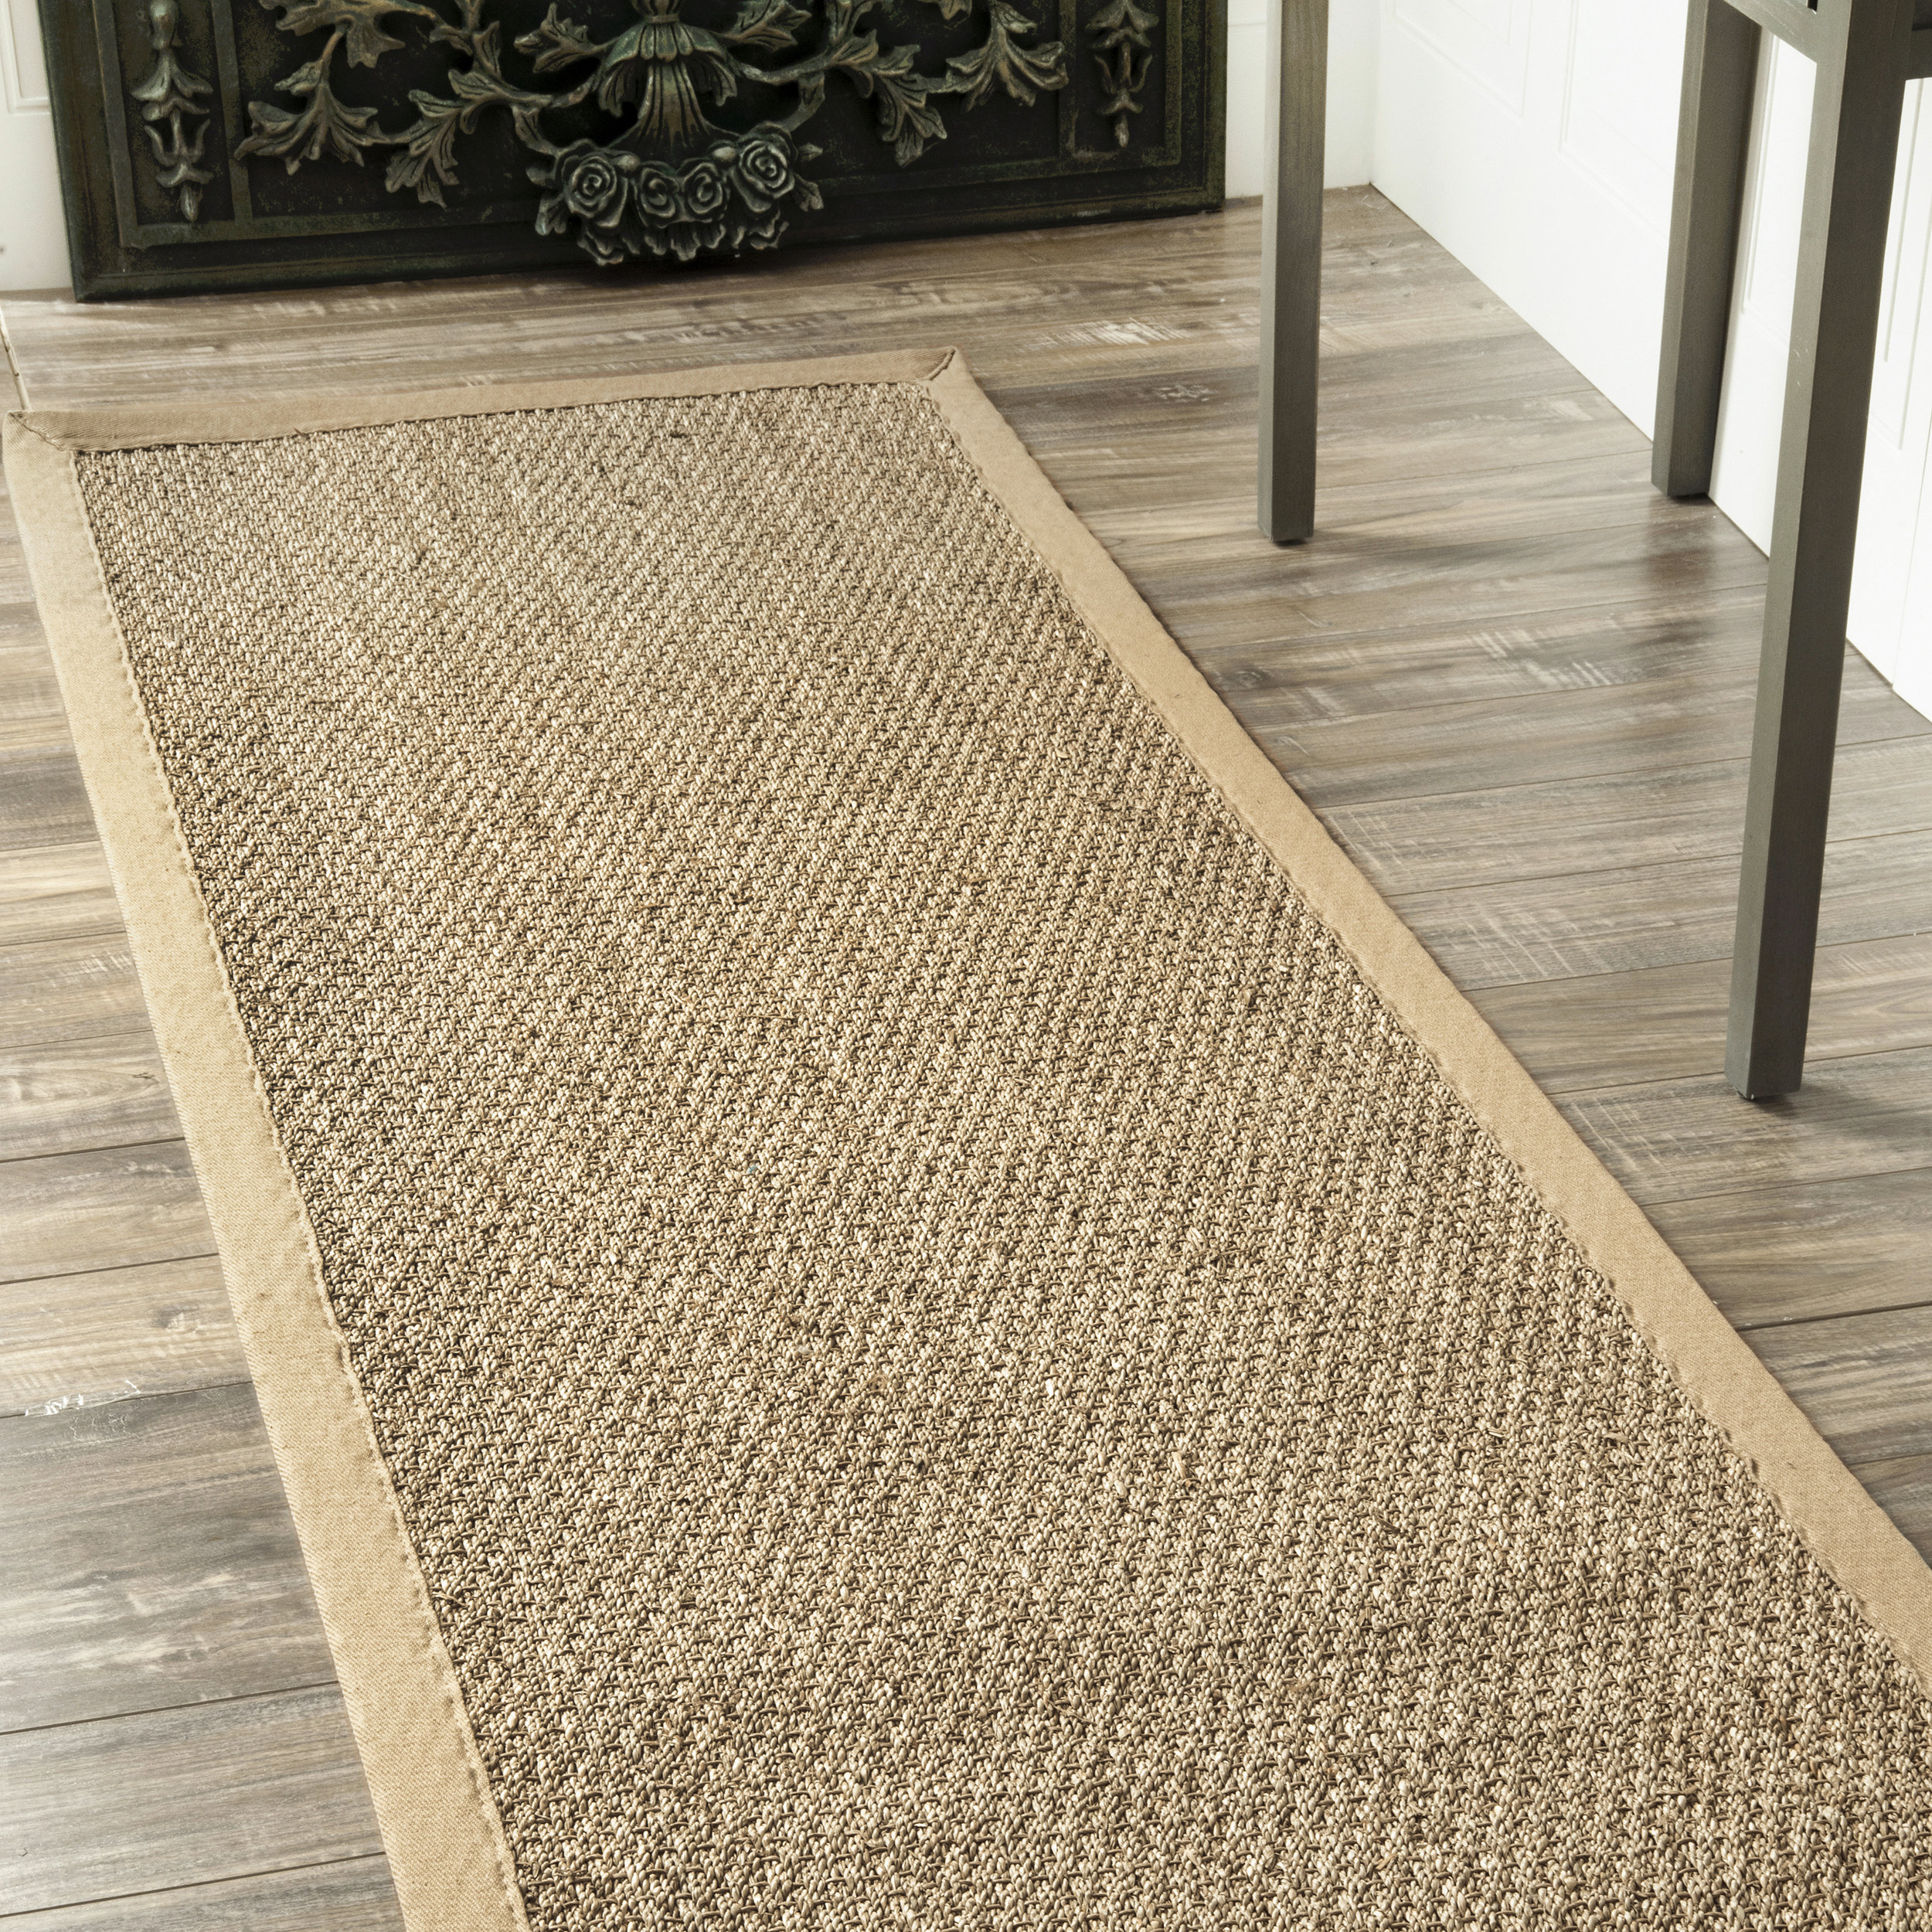 Double Sided Carpet Tape - Rug Tape for Area Rugs on Hardwood, Carpet, Tile  (2.5